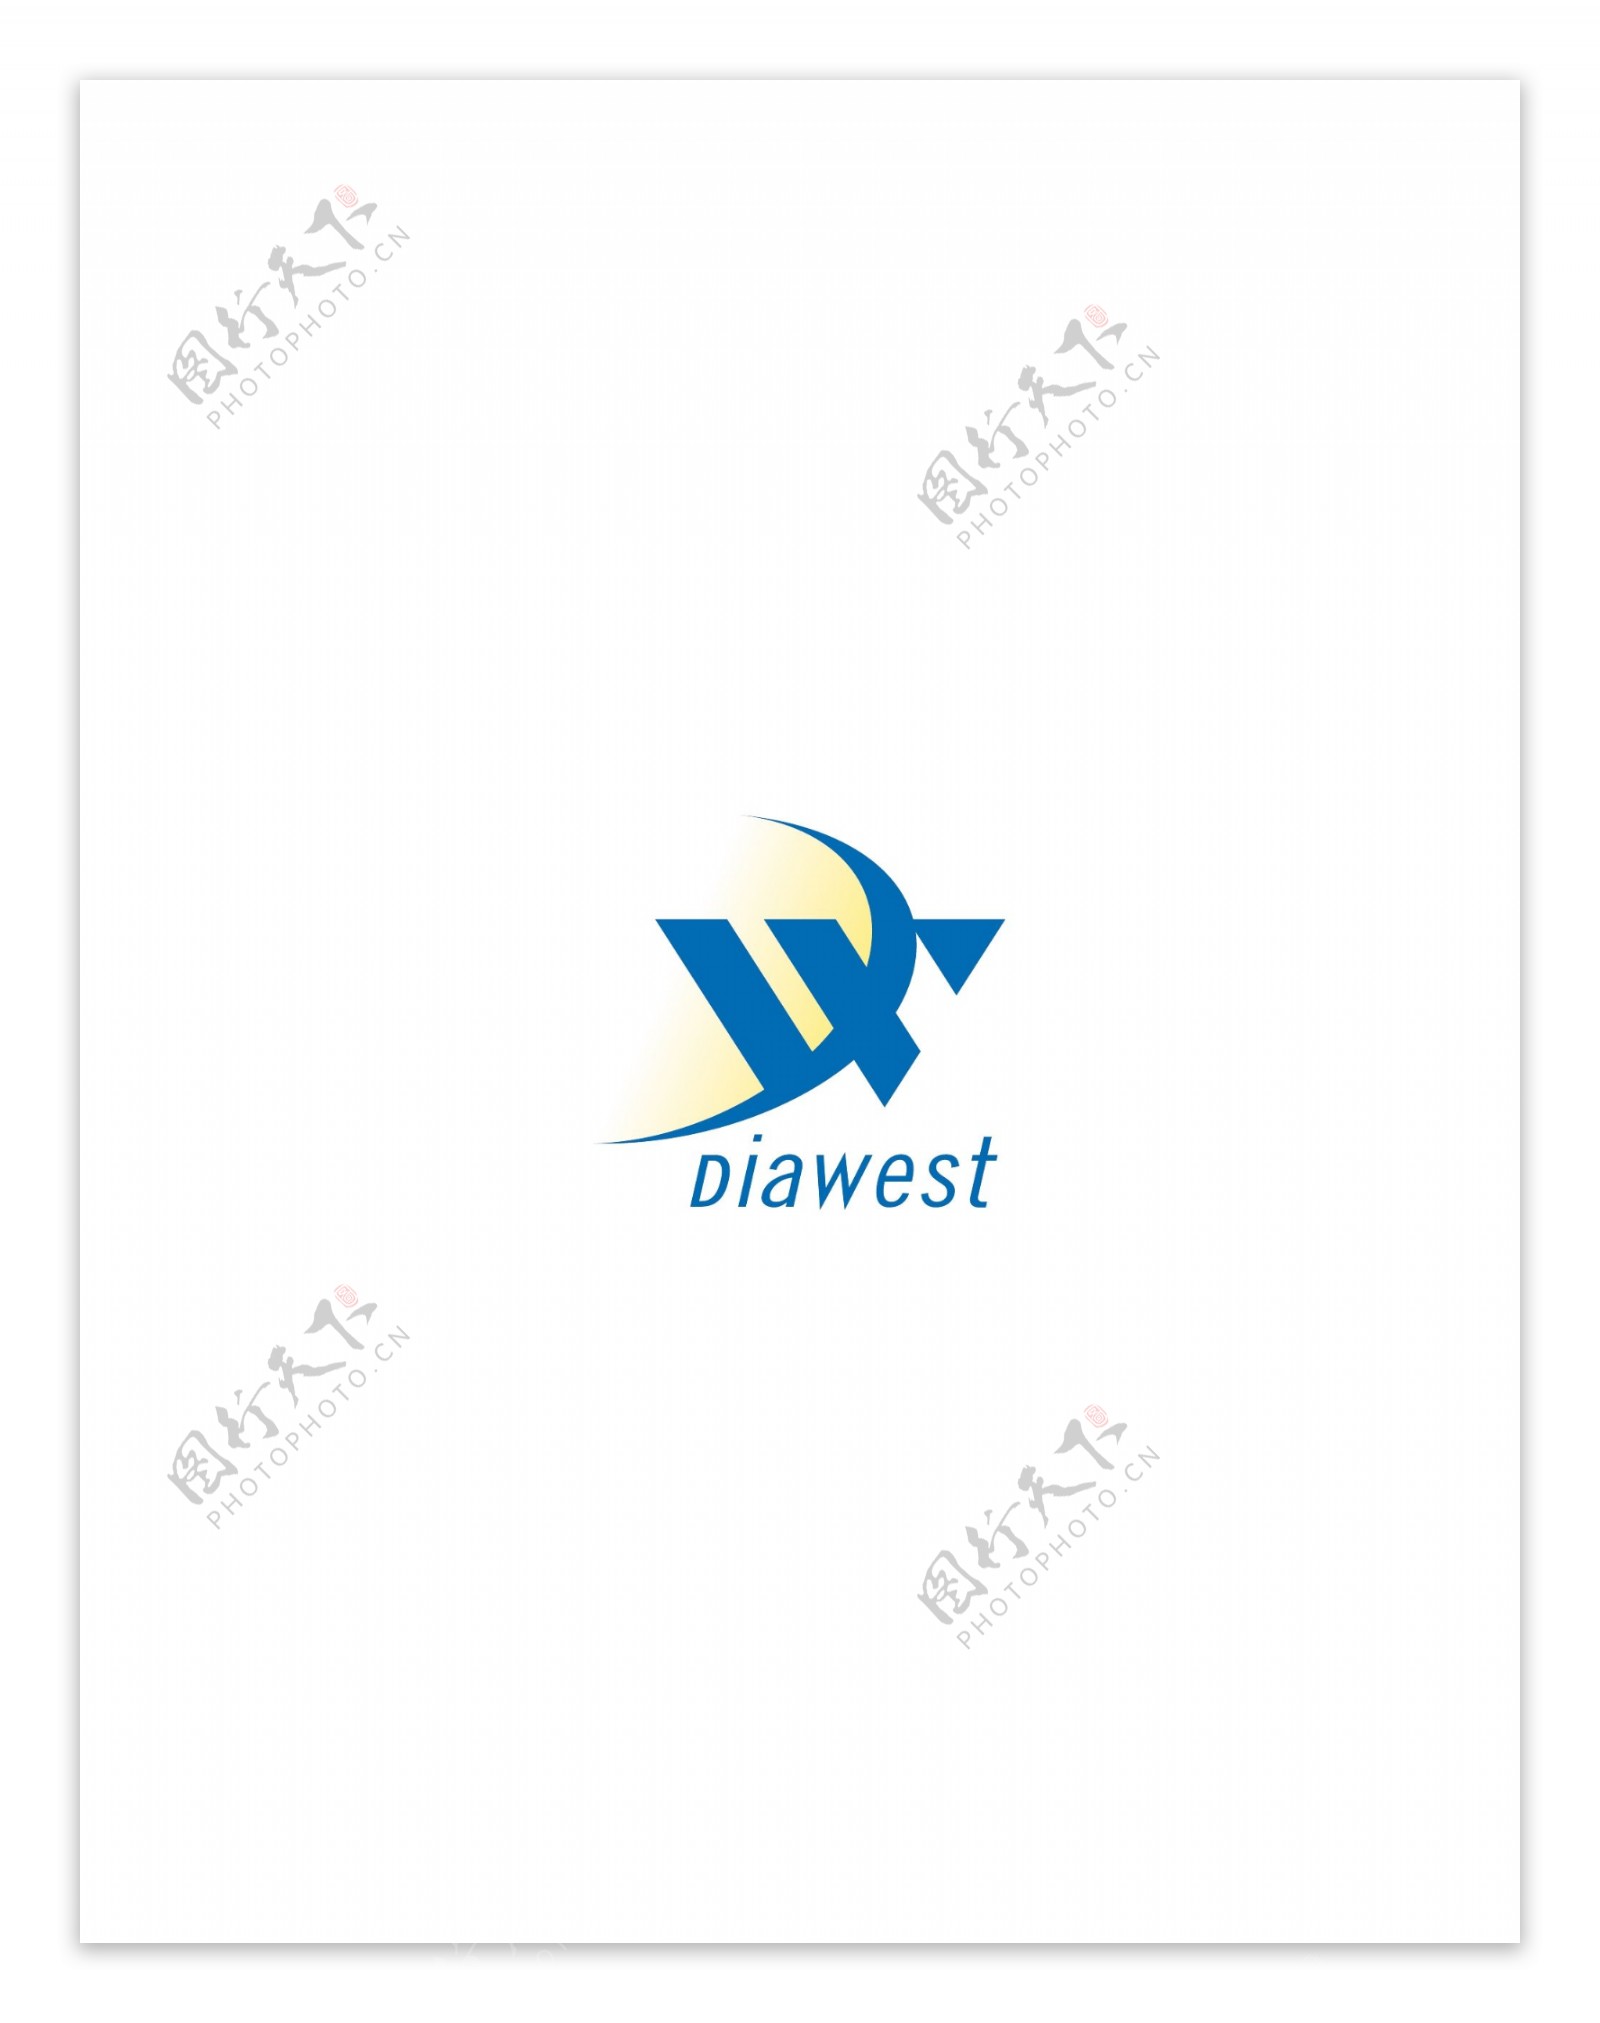 DiaWestlogo设计欣赏DiaWest电脑公司标志下载标志设计欣赏